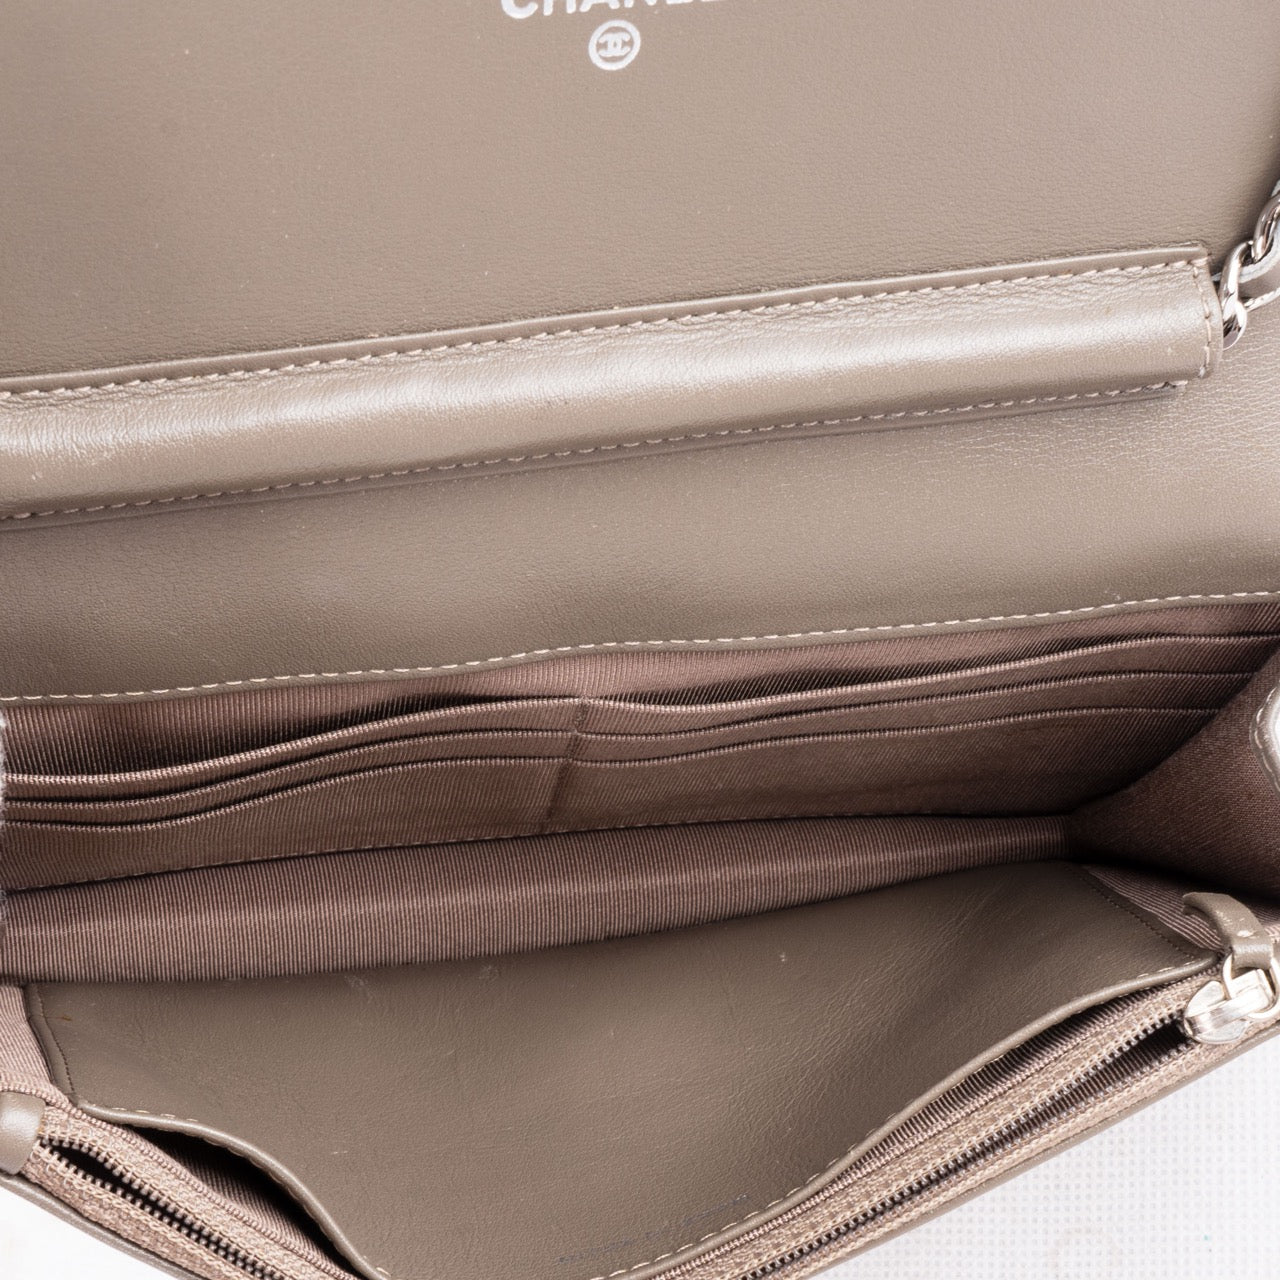 Chanel Patent Leather Crossbody WOC Flap Bag